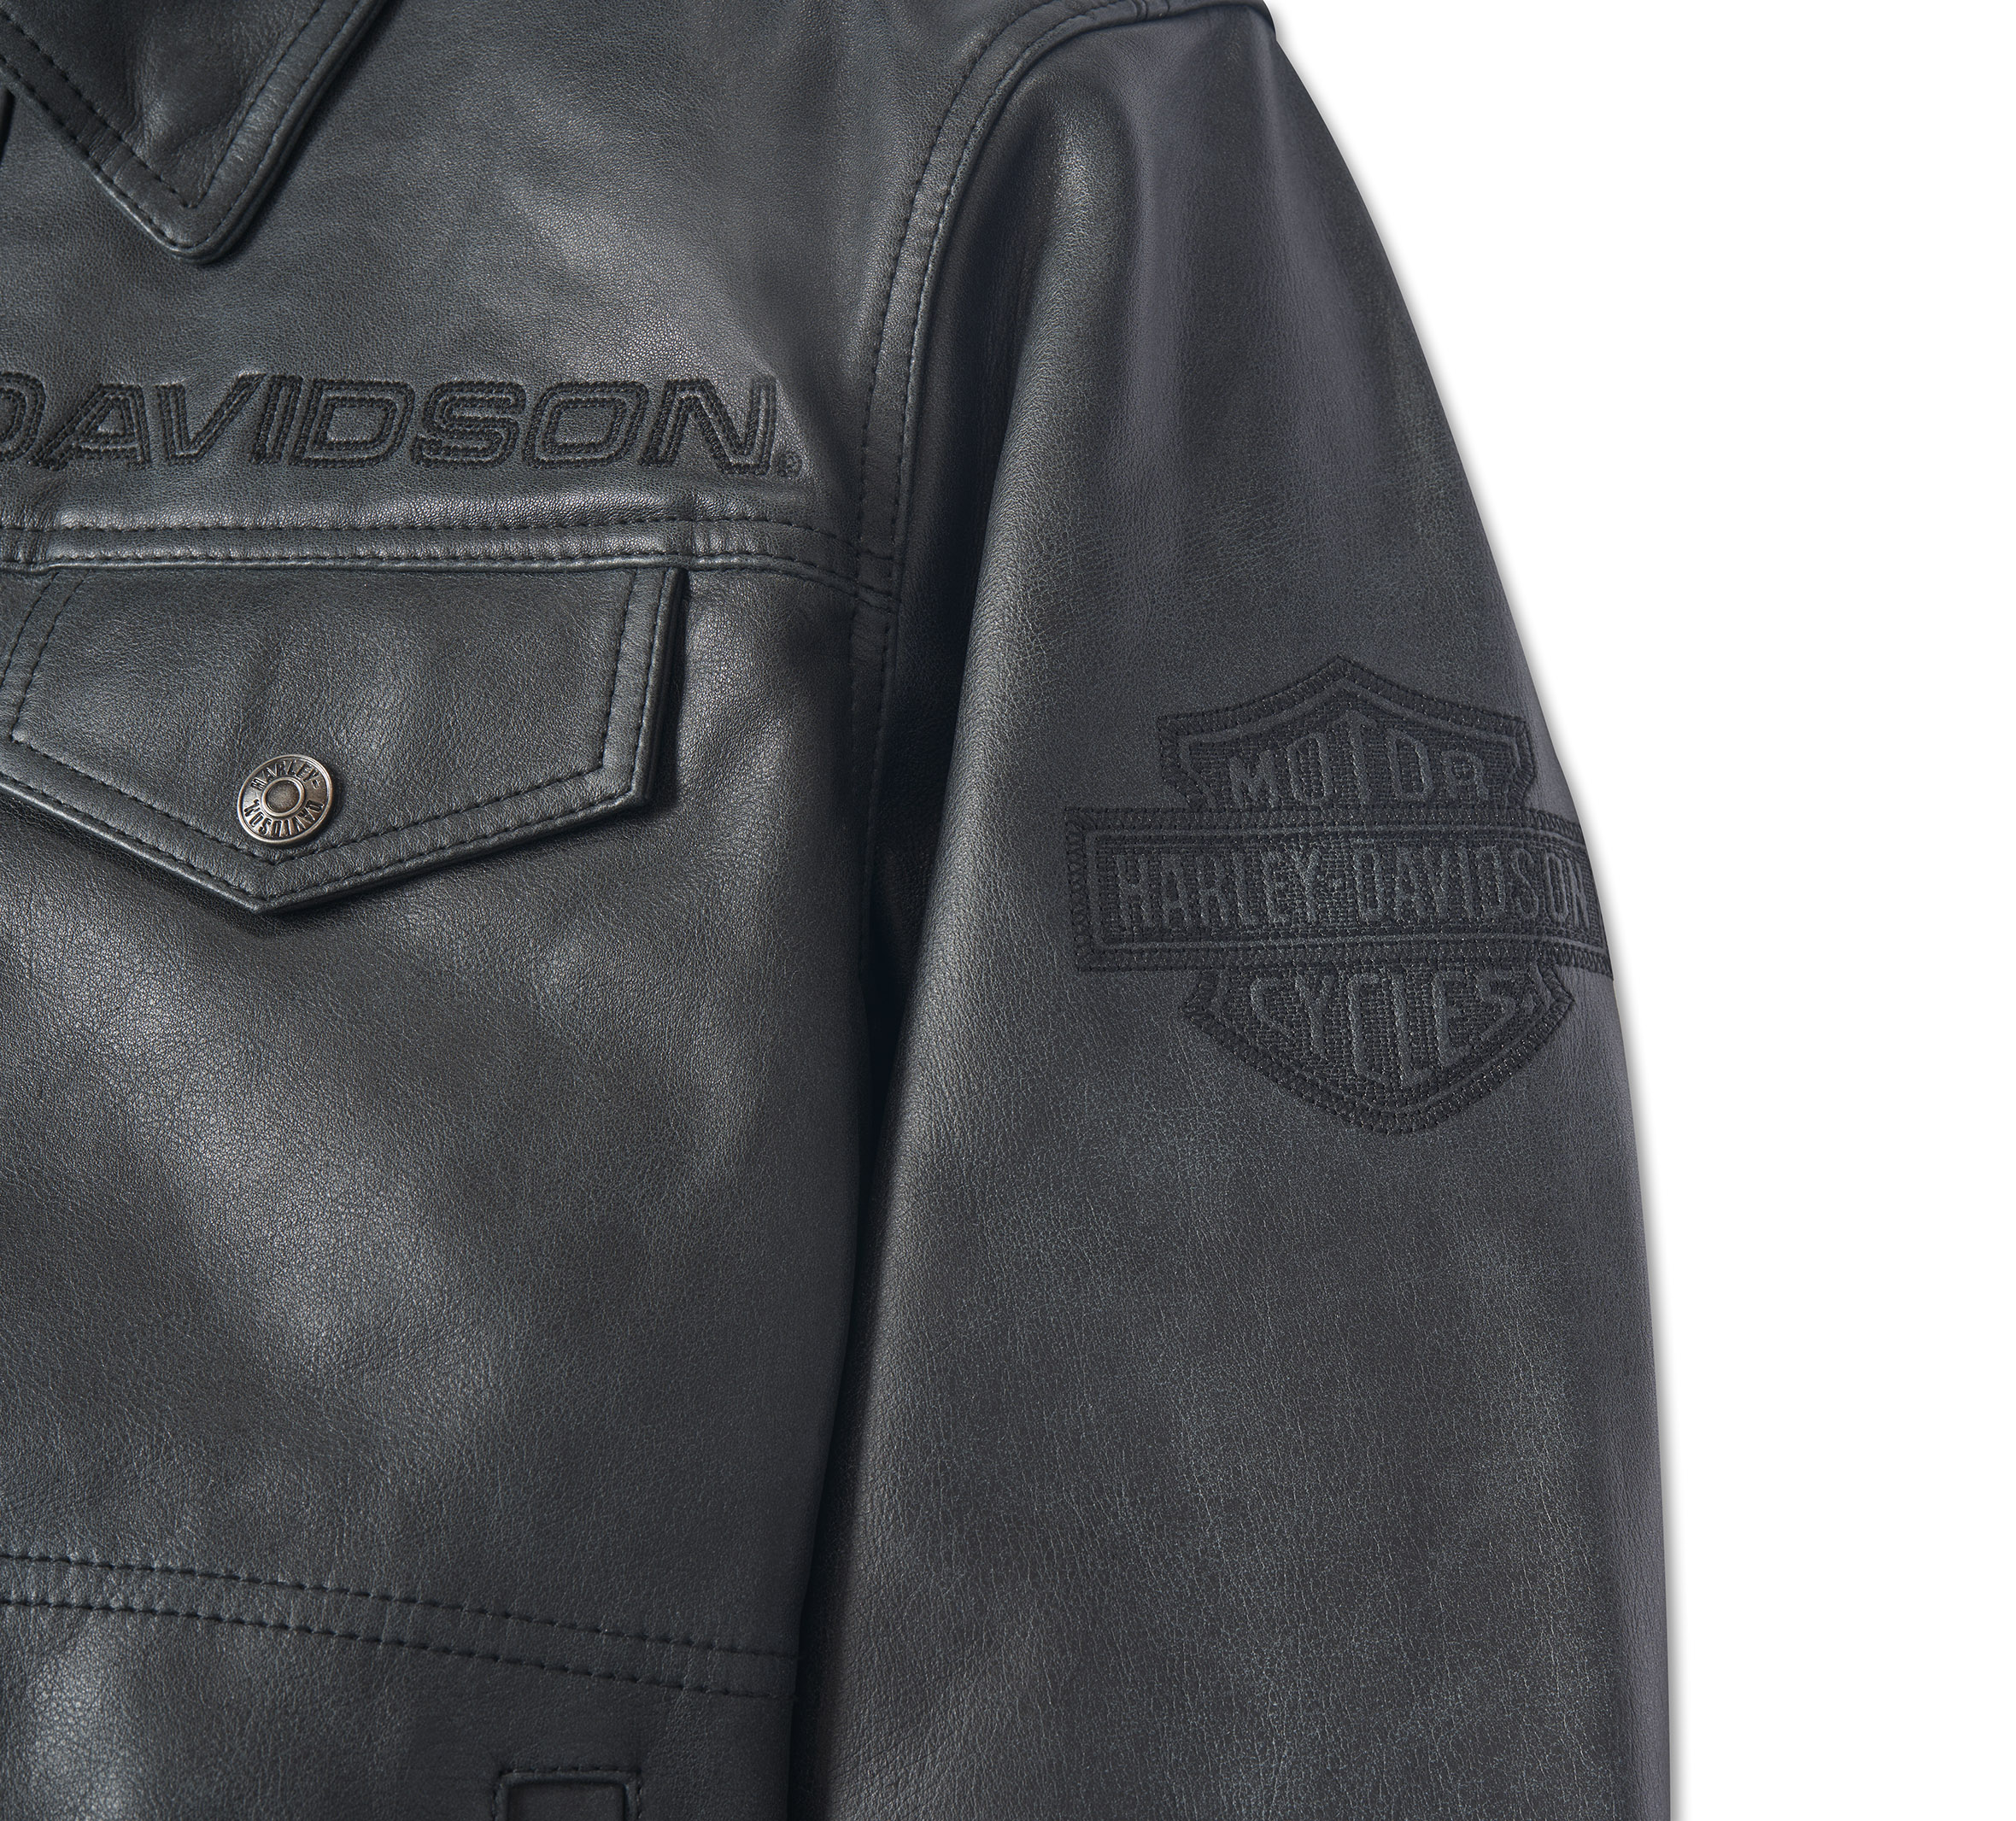 Men's Iron Mountain Leather Jacket | Harley-Davidson USA